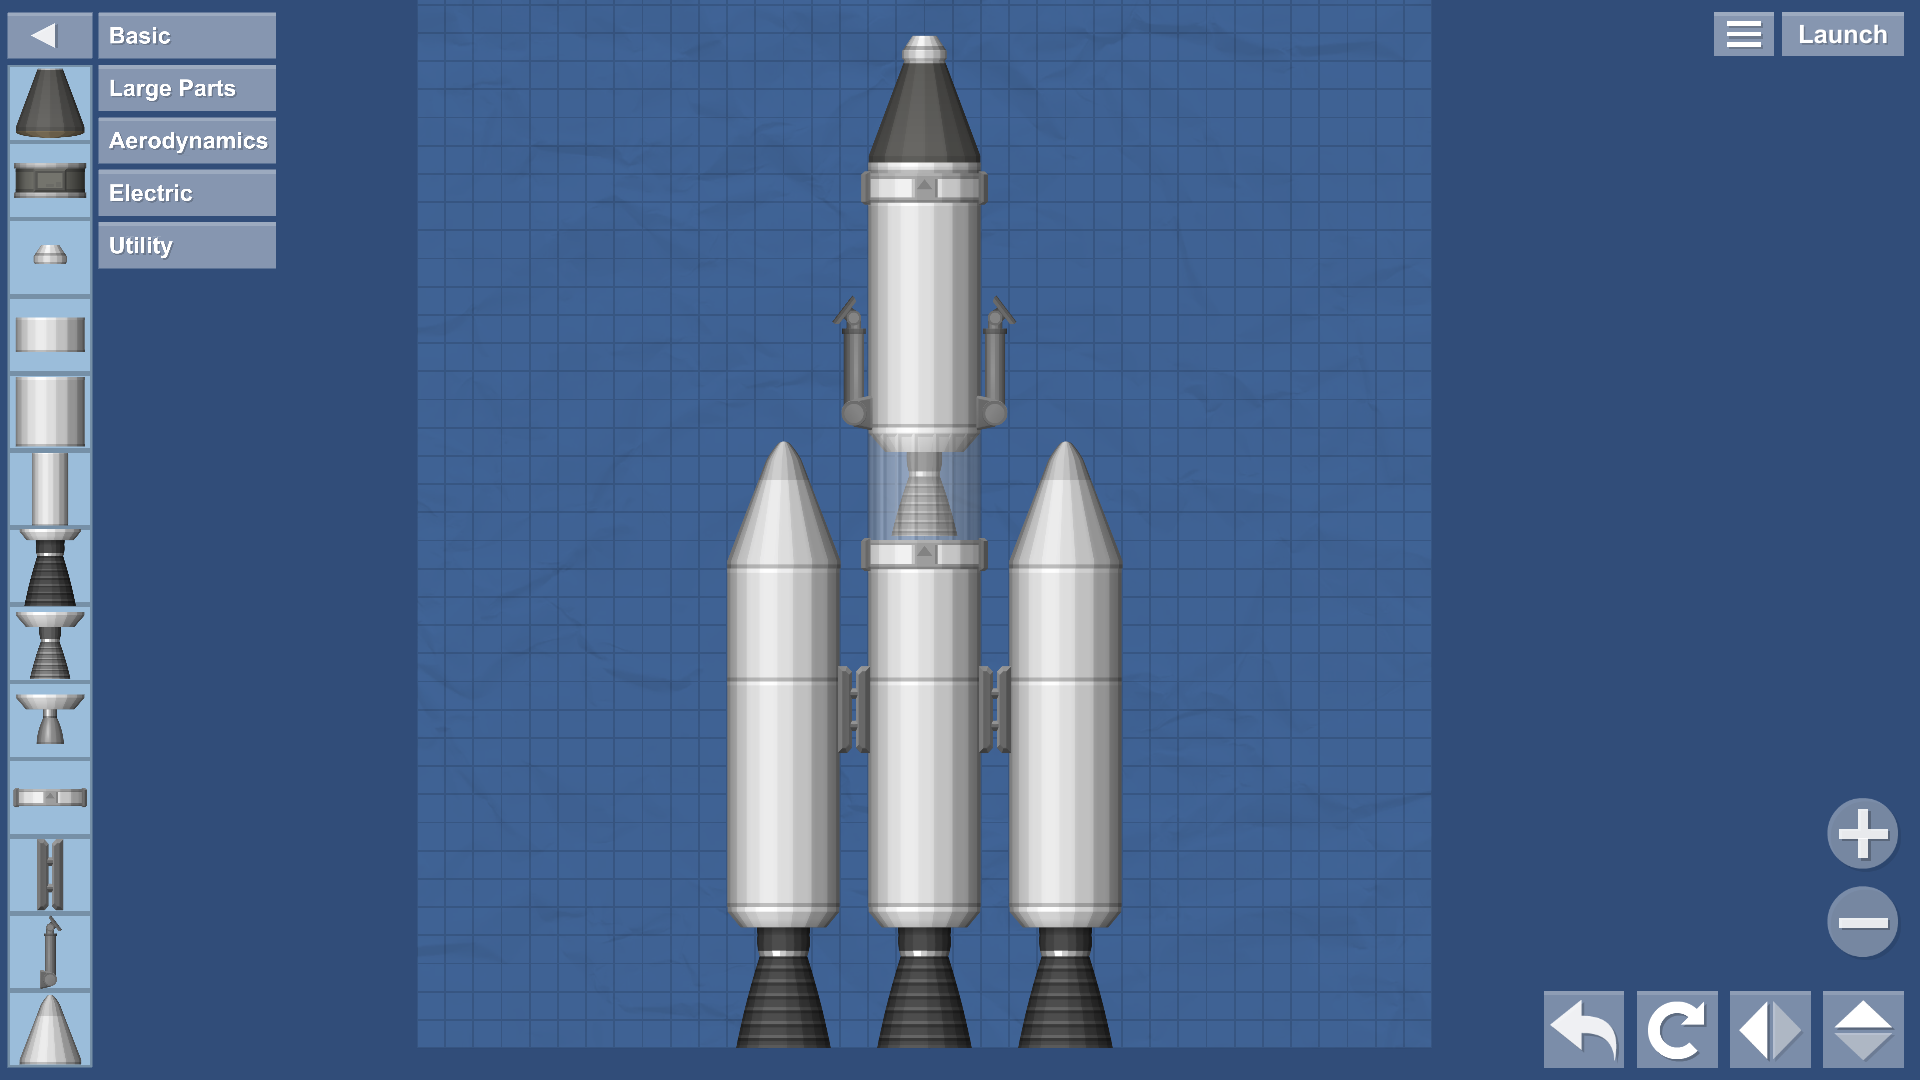 Space flight simulator чертежи ракет мод на готовые ракеты